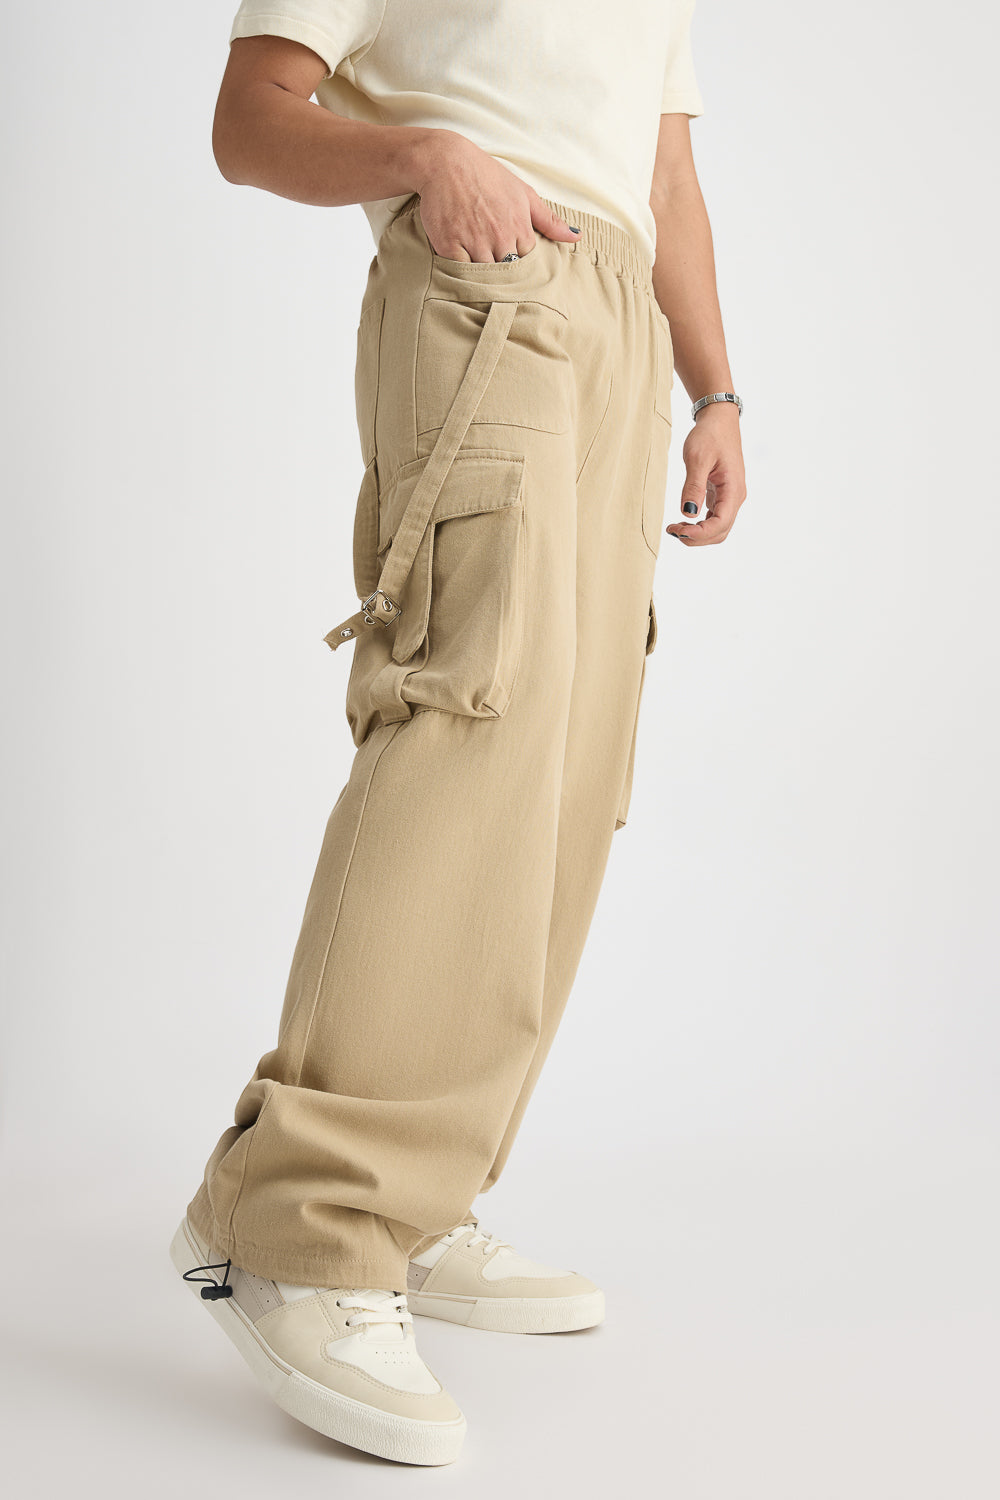 Slim Fit Cotton Twill Cargo Jogger Multi Pocket Style Men Pants – FanFreakz